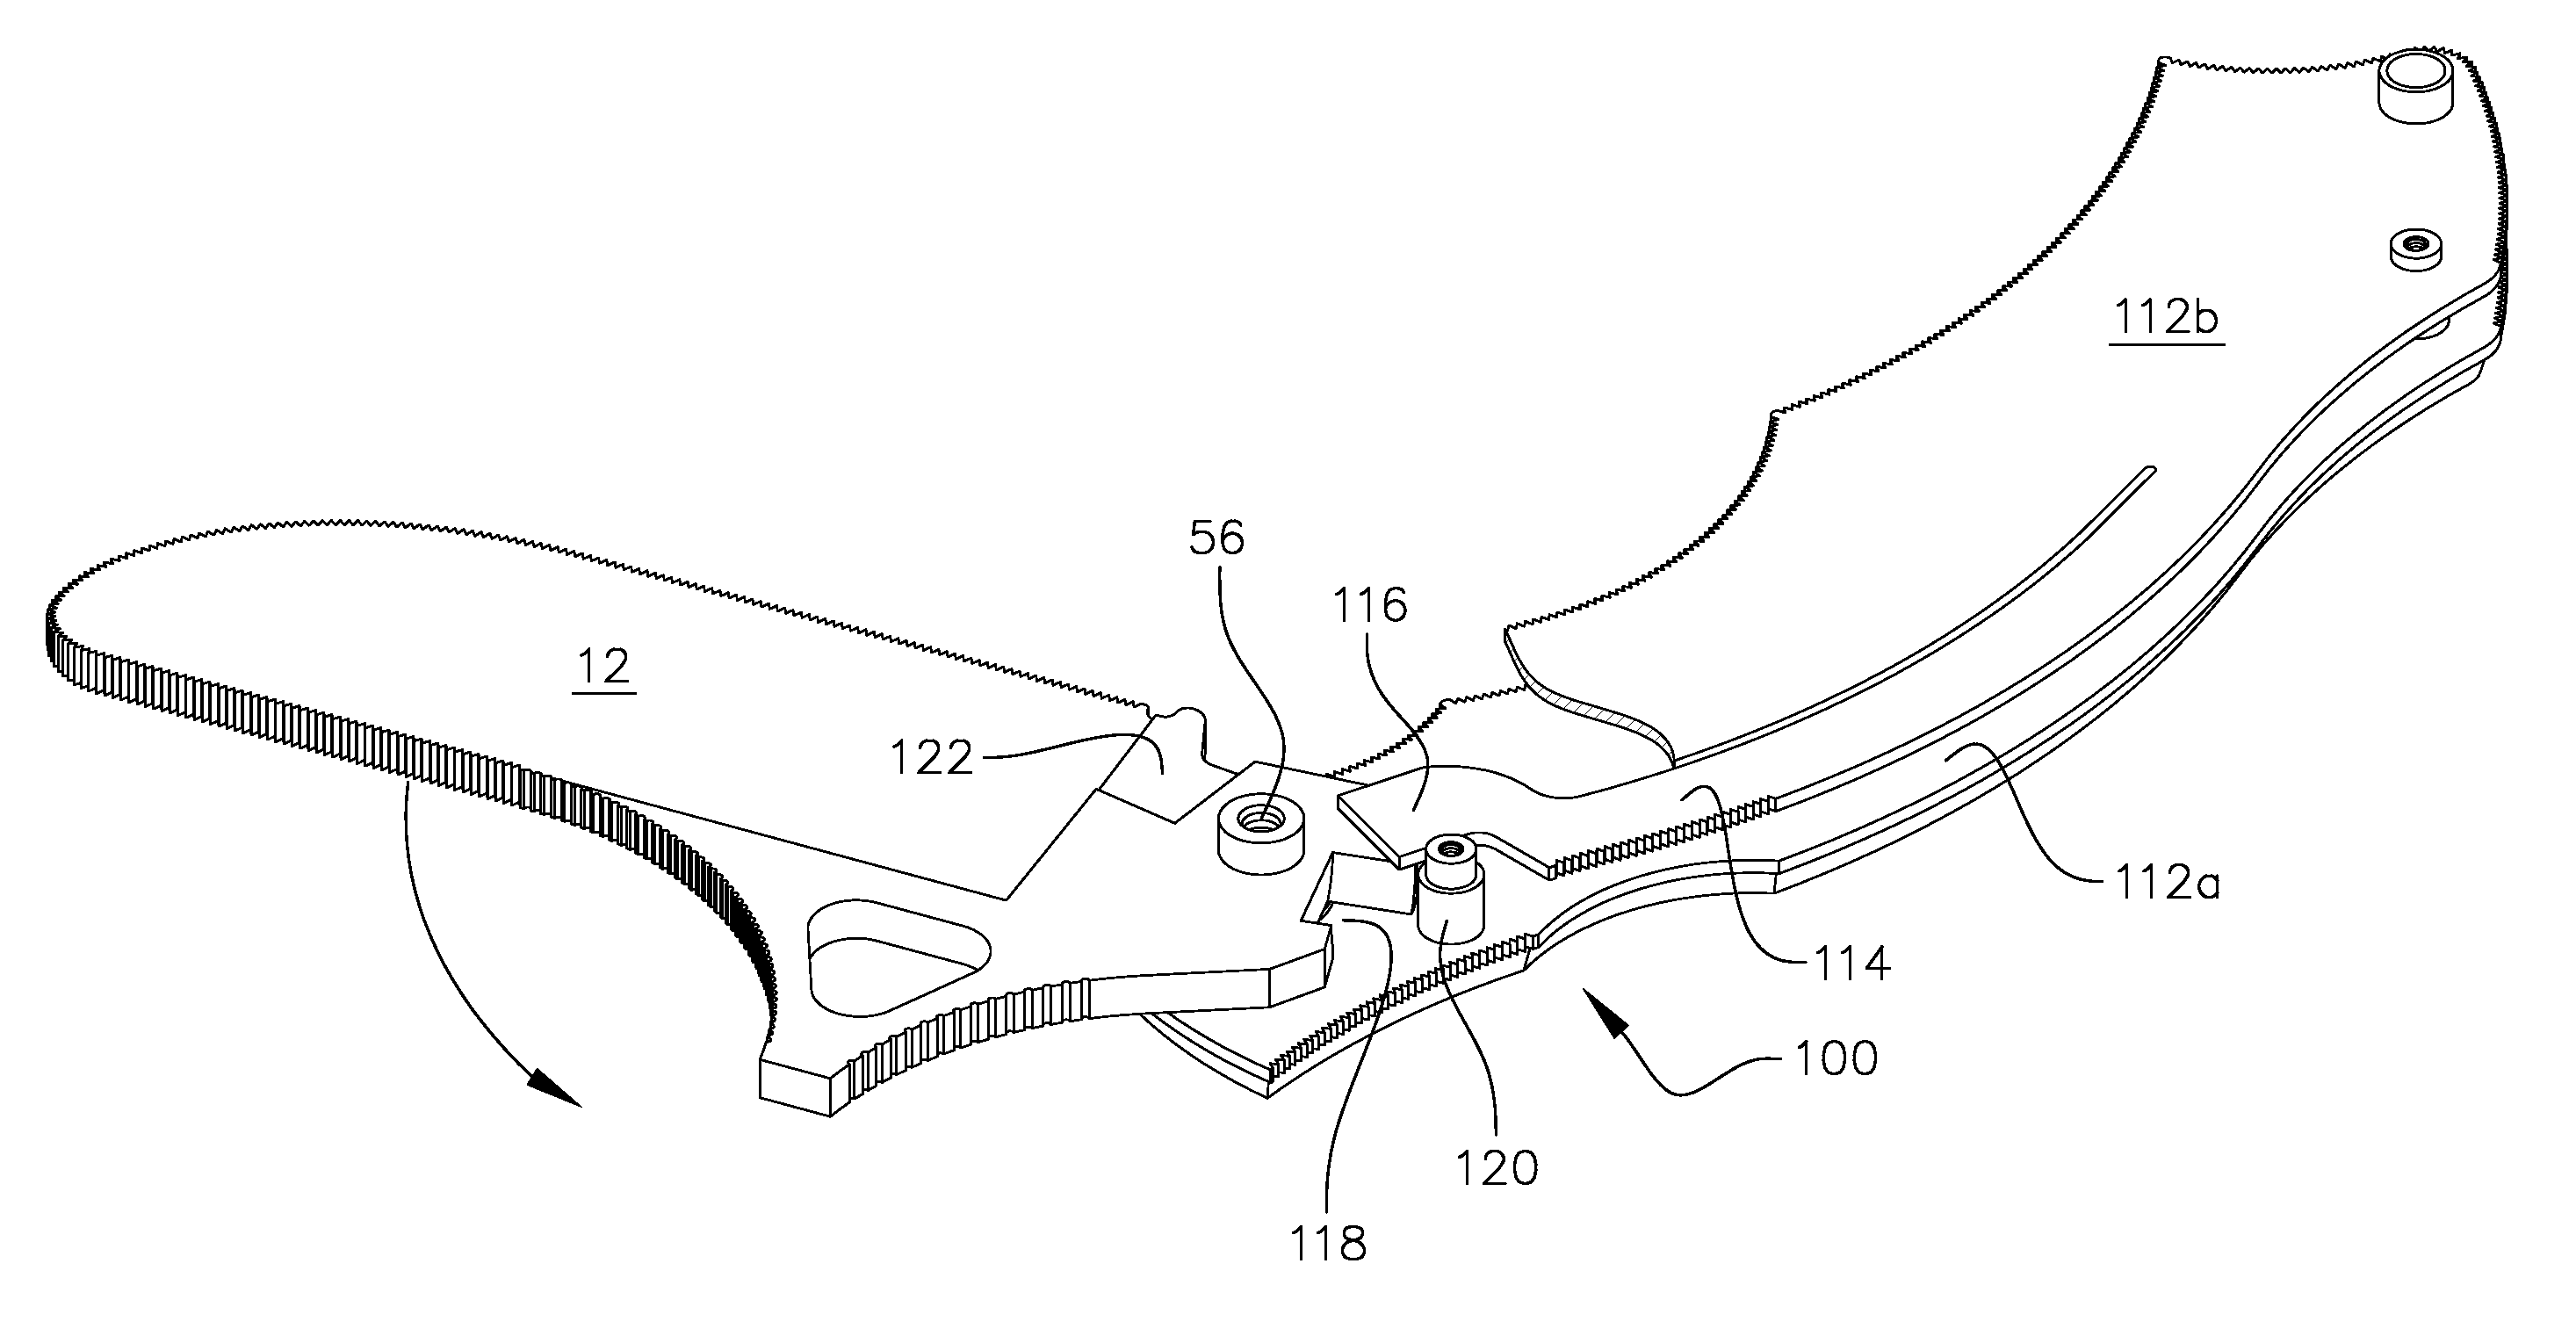 Folding knife with puzzle piece locking mechanism